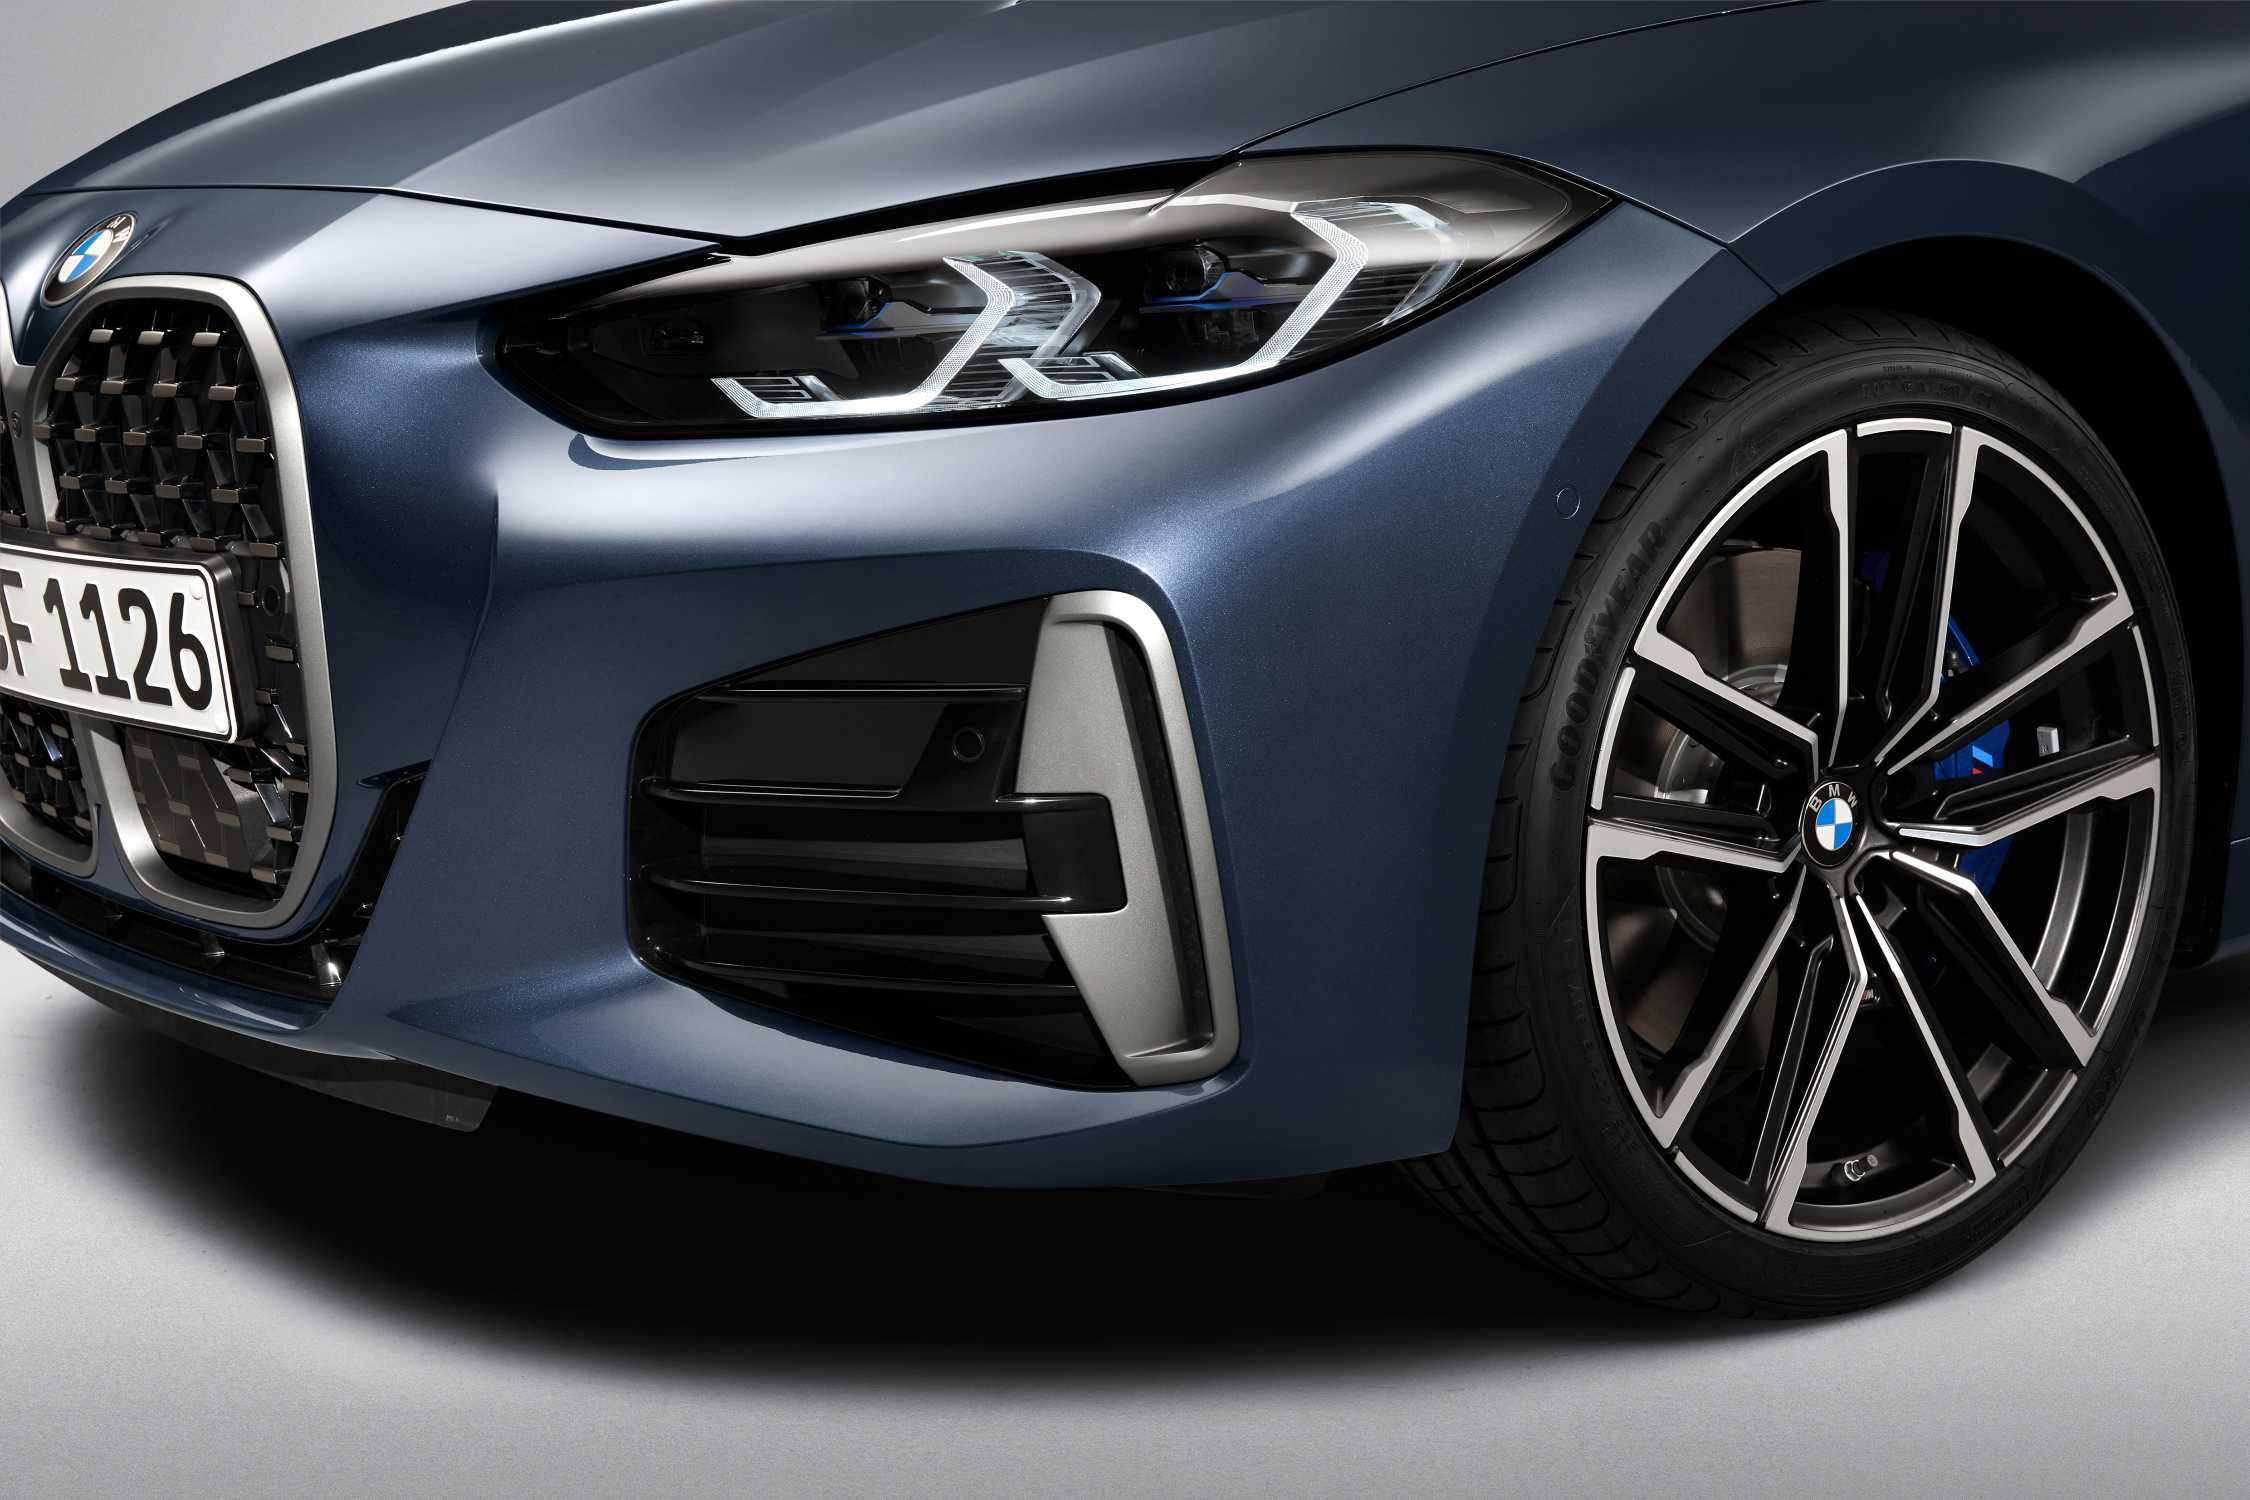 BMW M440i xDrive, Arctic Race Blue, Rim 19” Styling 797 M (06/2020).